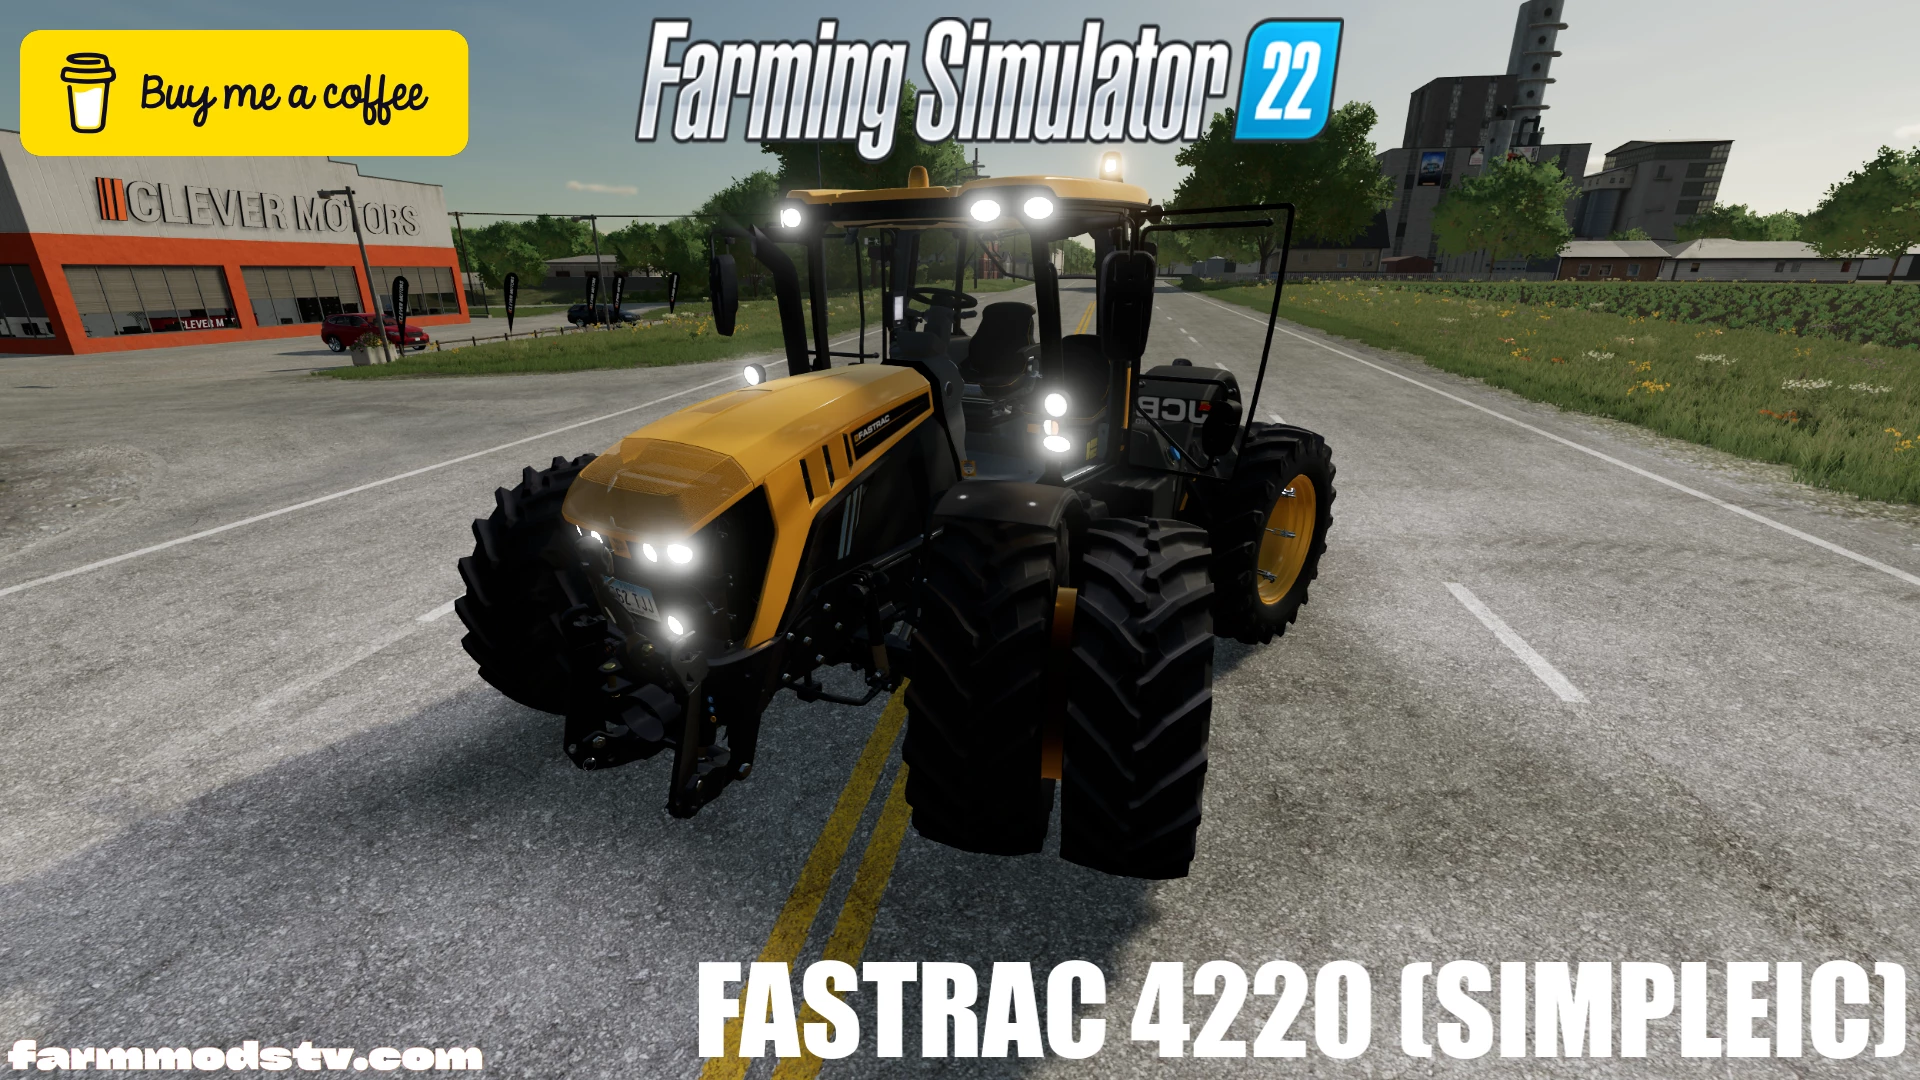 Fastrac 4220 SIMPLEIC